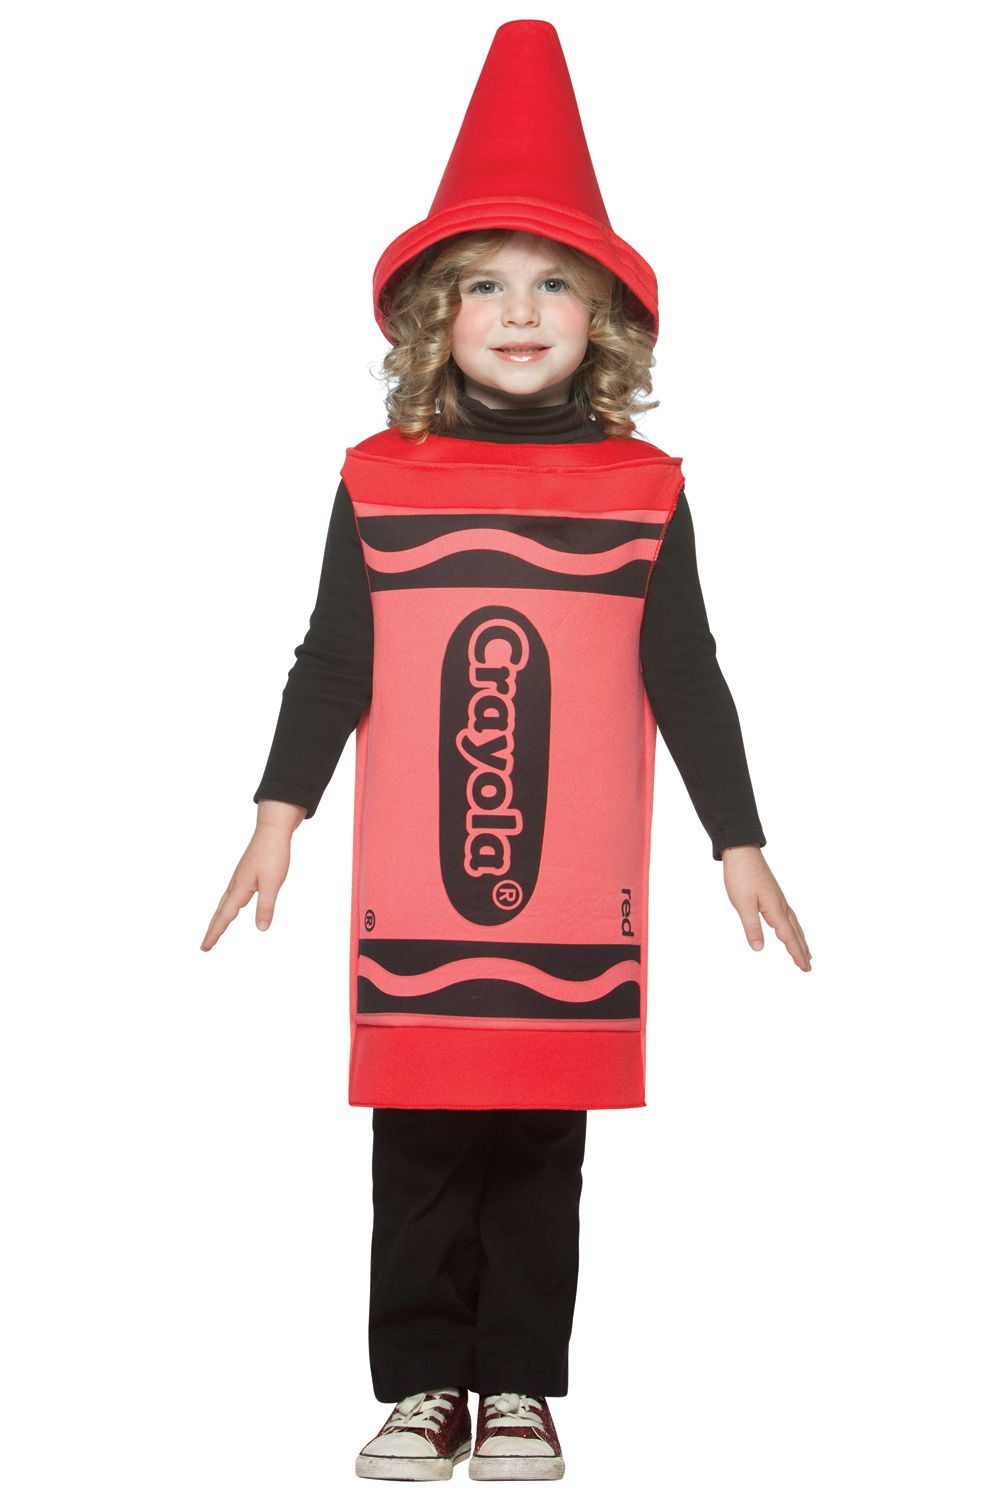 Crayola Red Halloween Costume - image 2 of 2